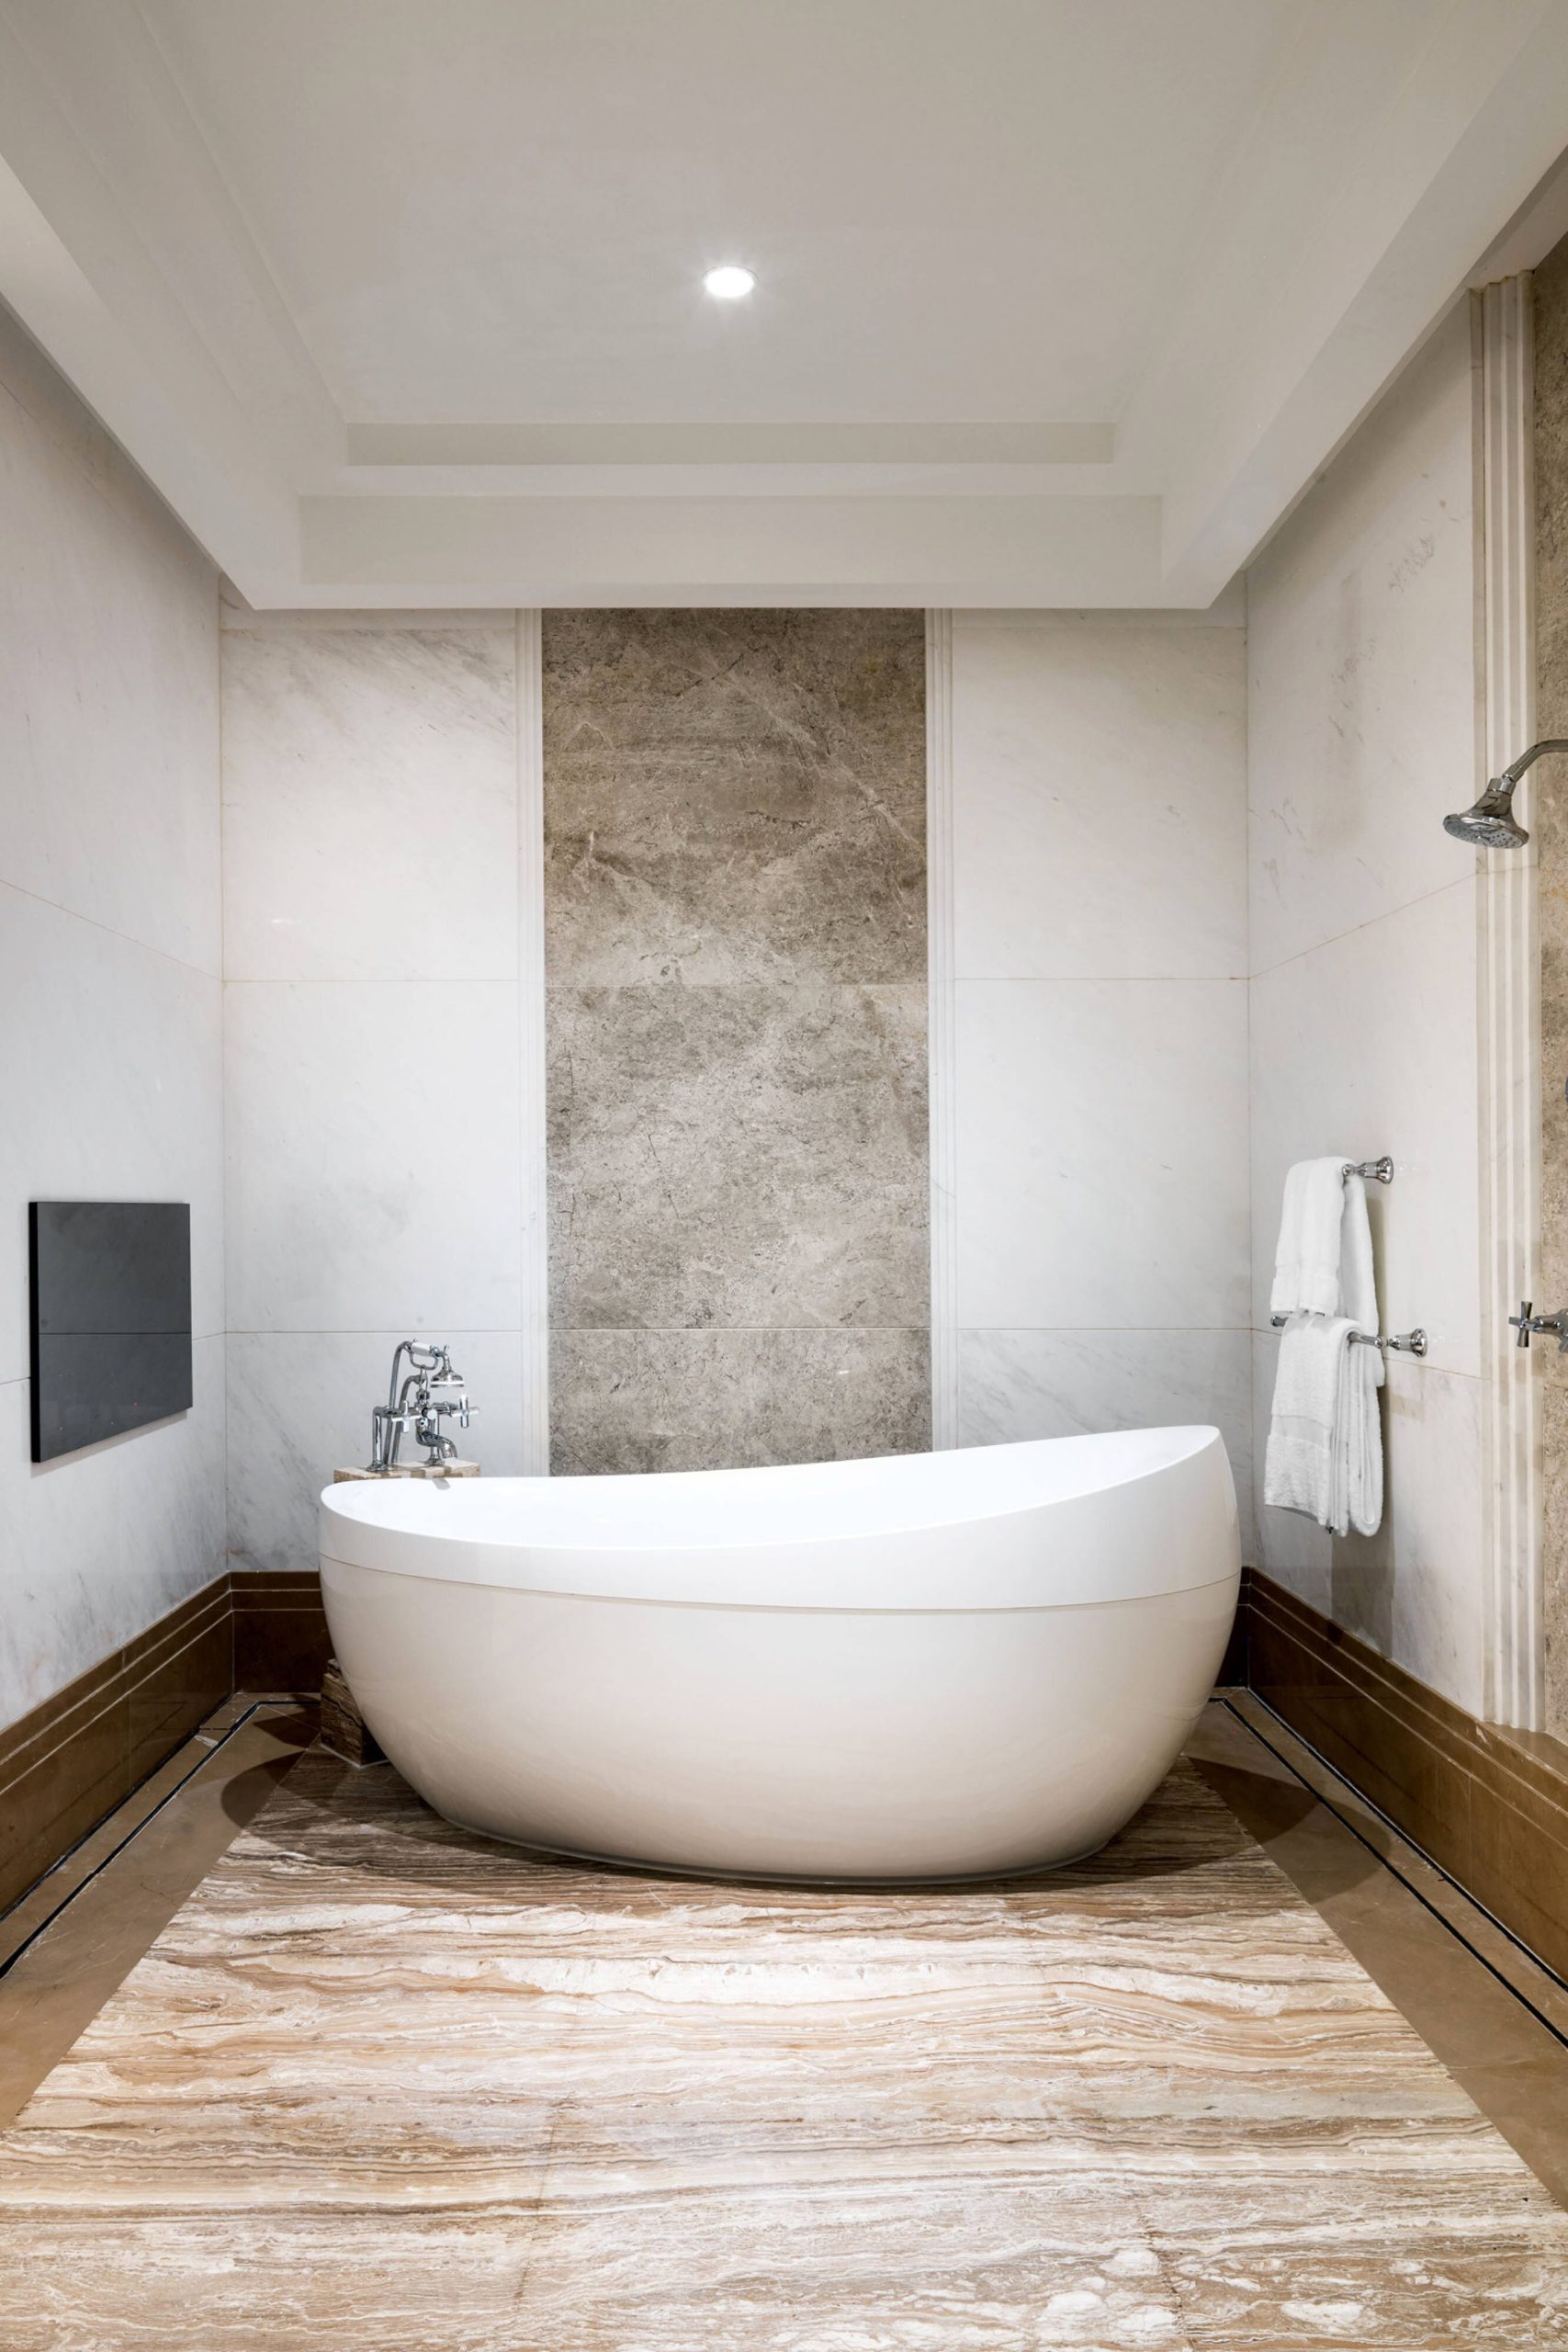 The St. Regis Chengdu Hotel – Chengdu, Sichuan, China – Presidential Suite Master Bathroom Tub